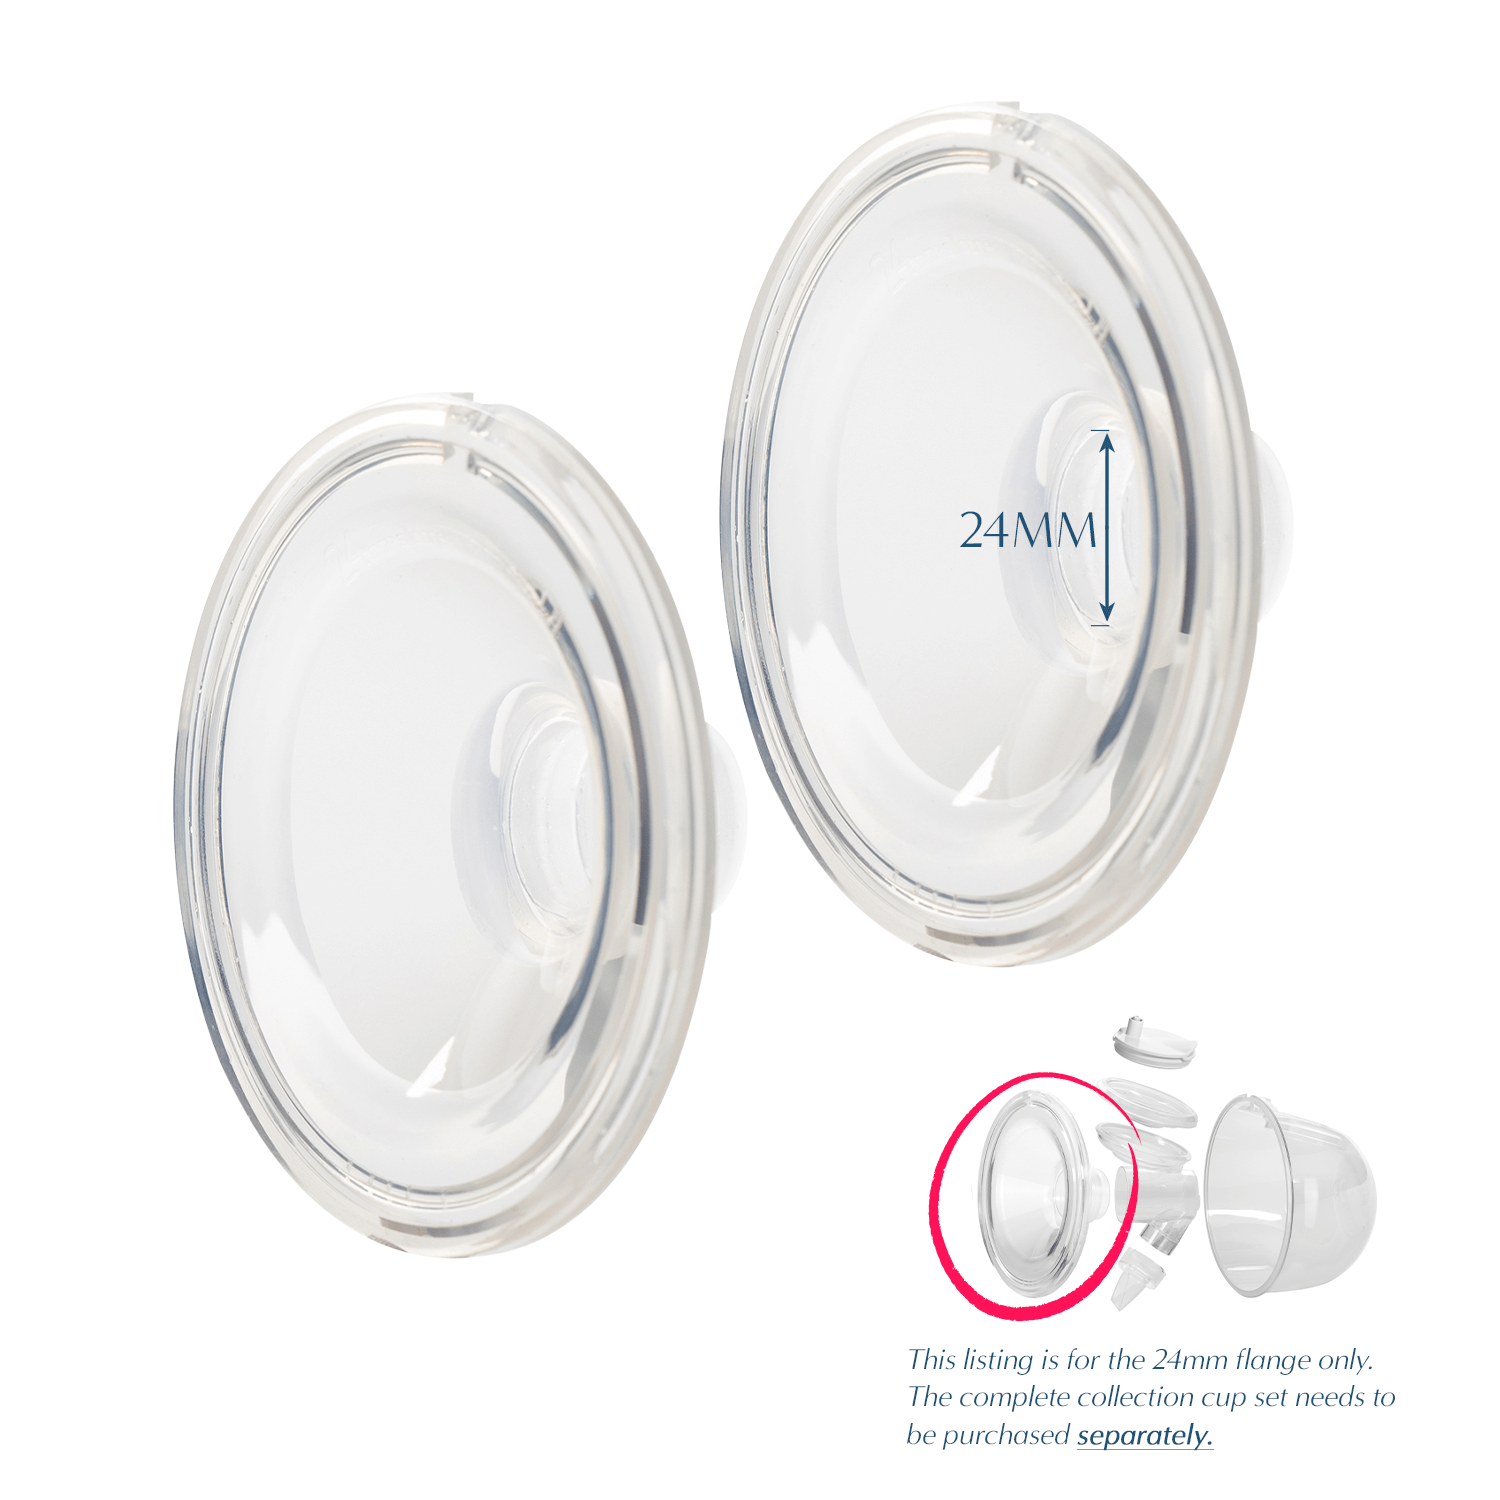 Zomee Silver Nursing Cups - Nipple Shields for Nursing Newborn Large